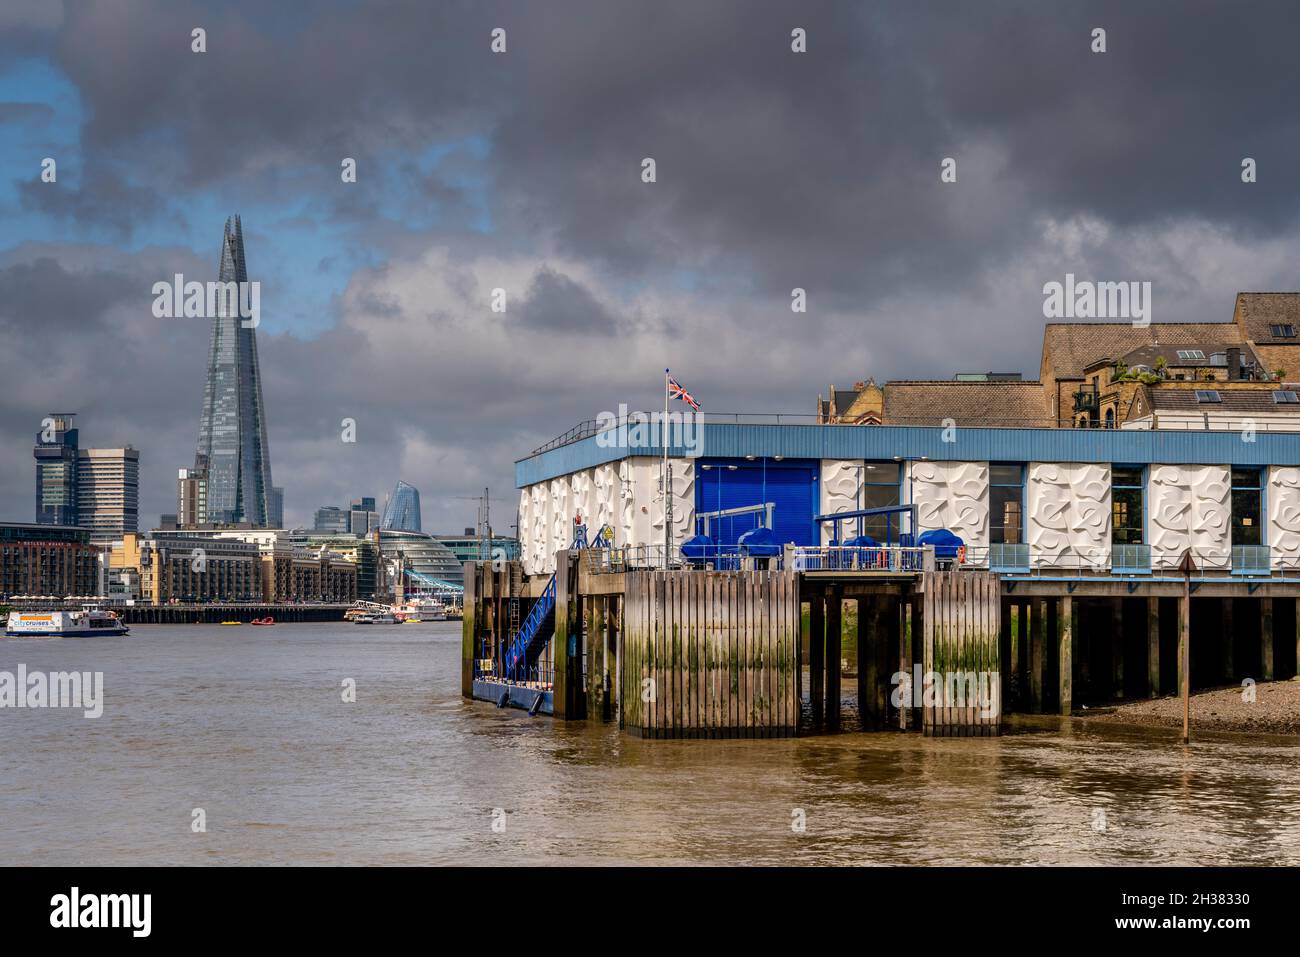 Wapping Police Boatyard, River Thames, London, UK. Stock Photo